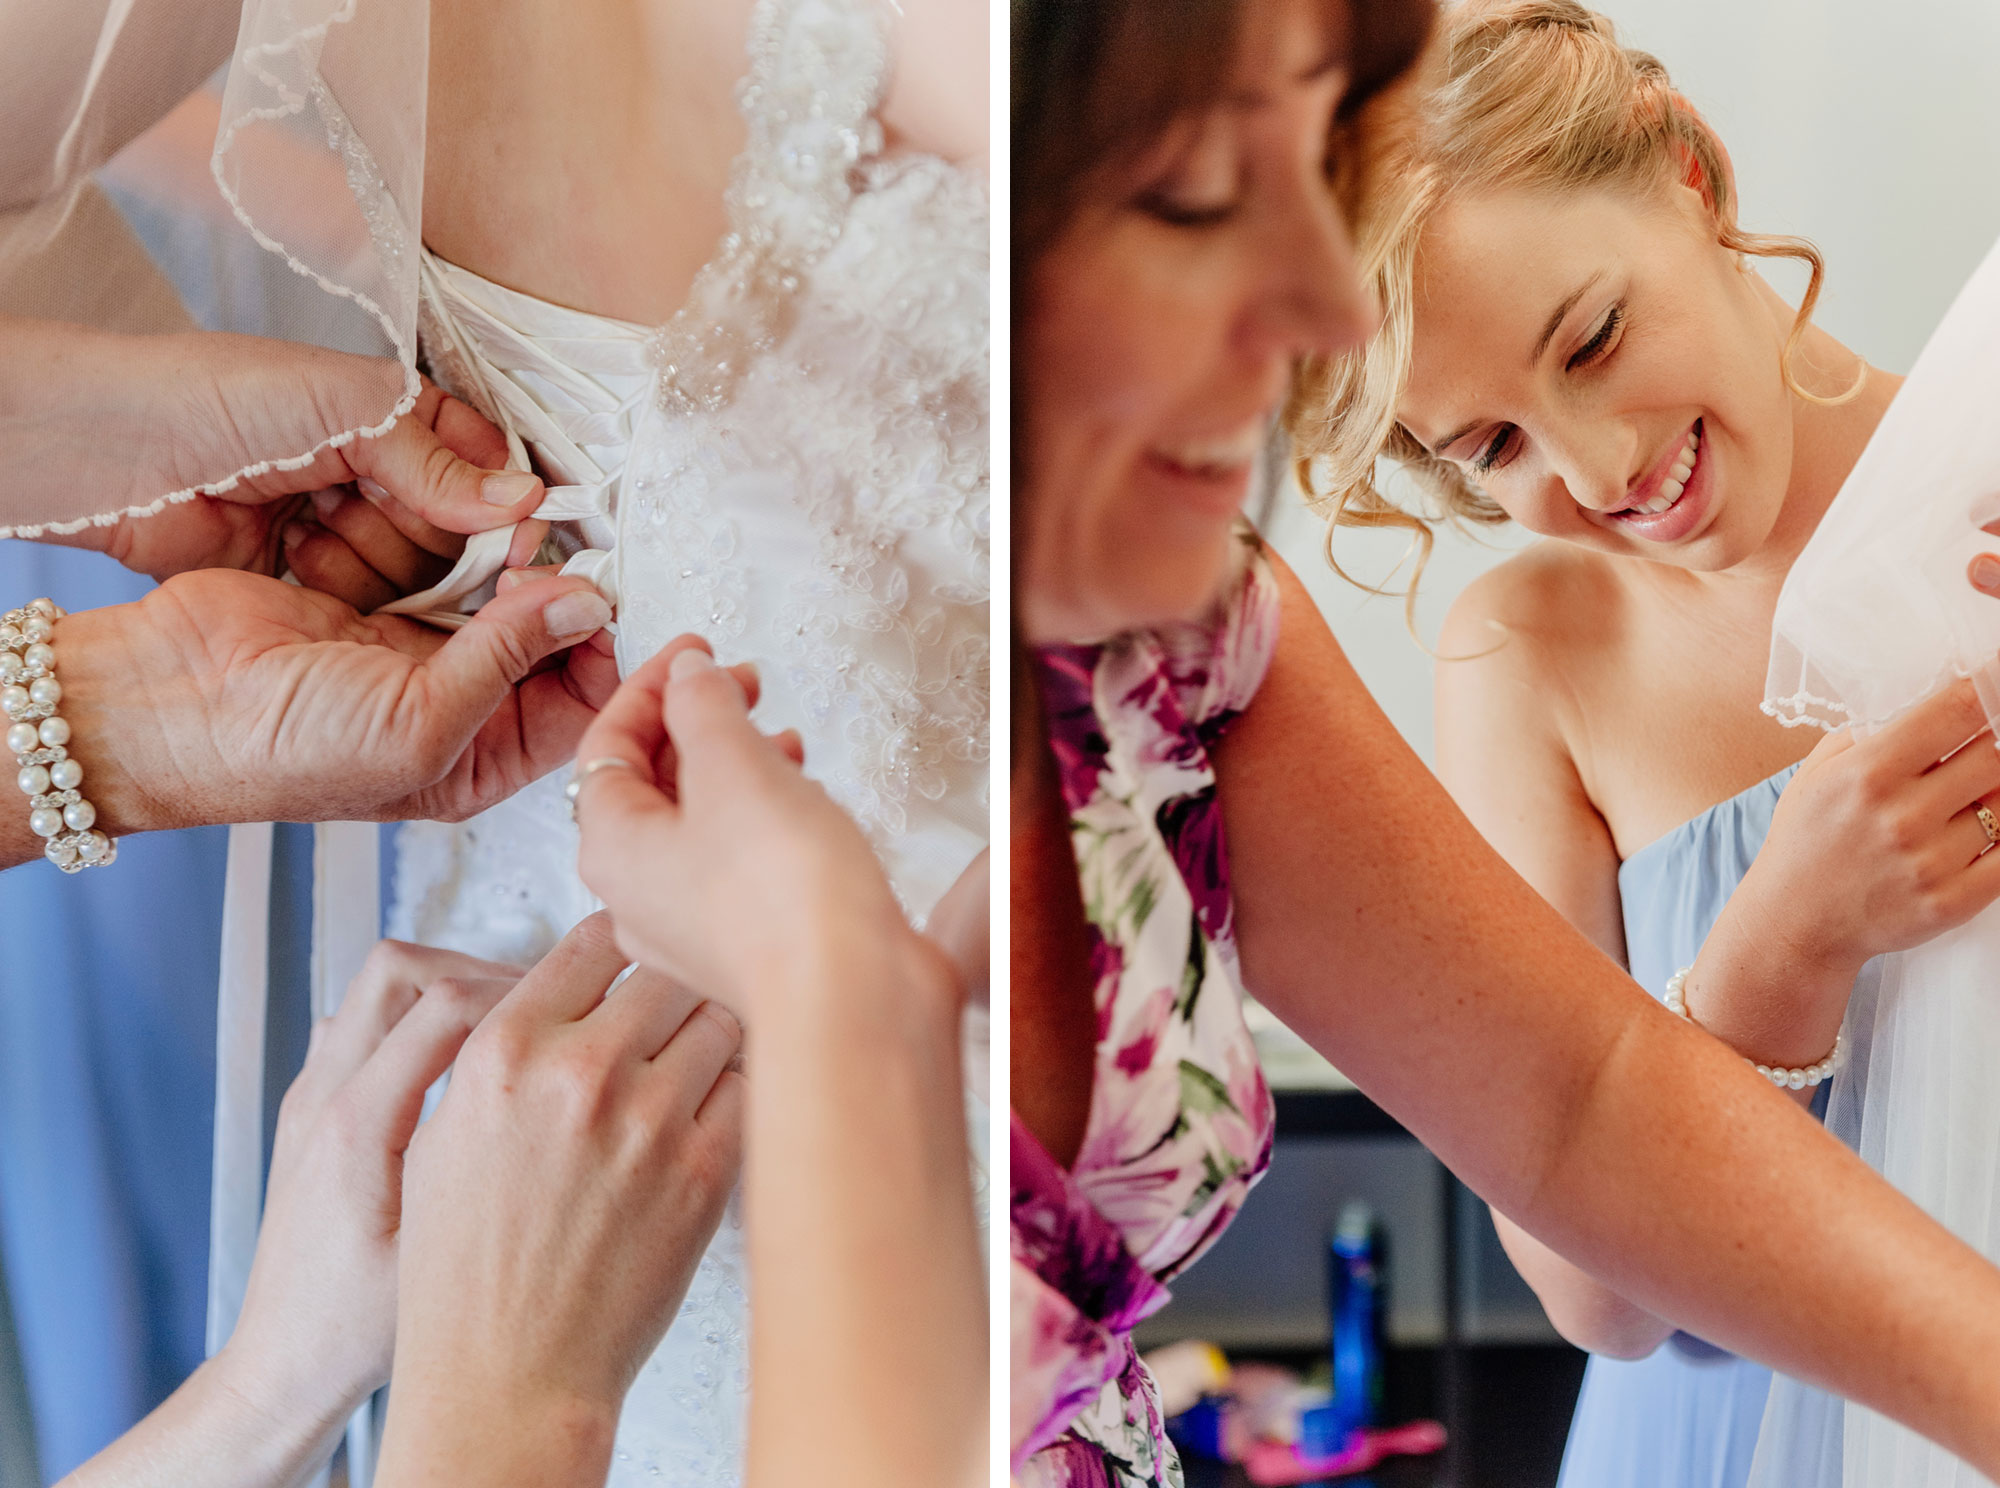 Helping bride into wedding dress